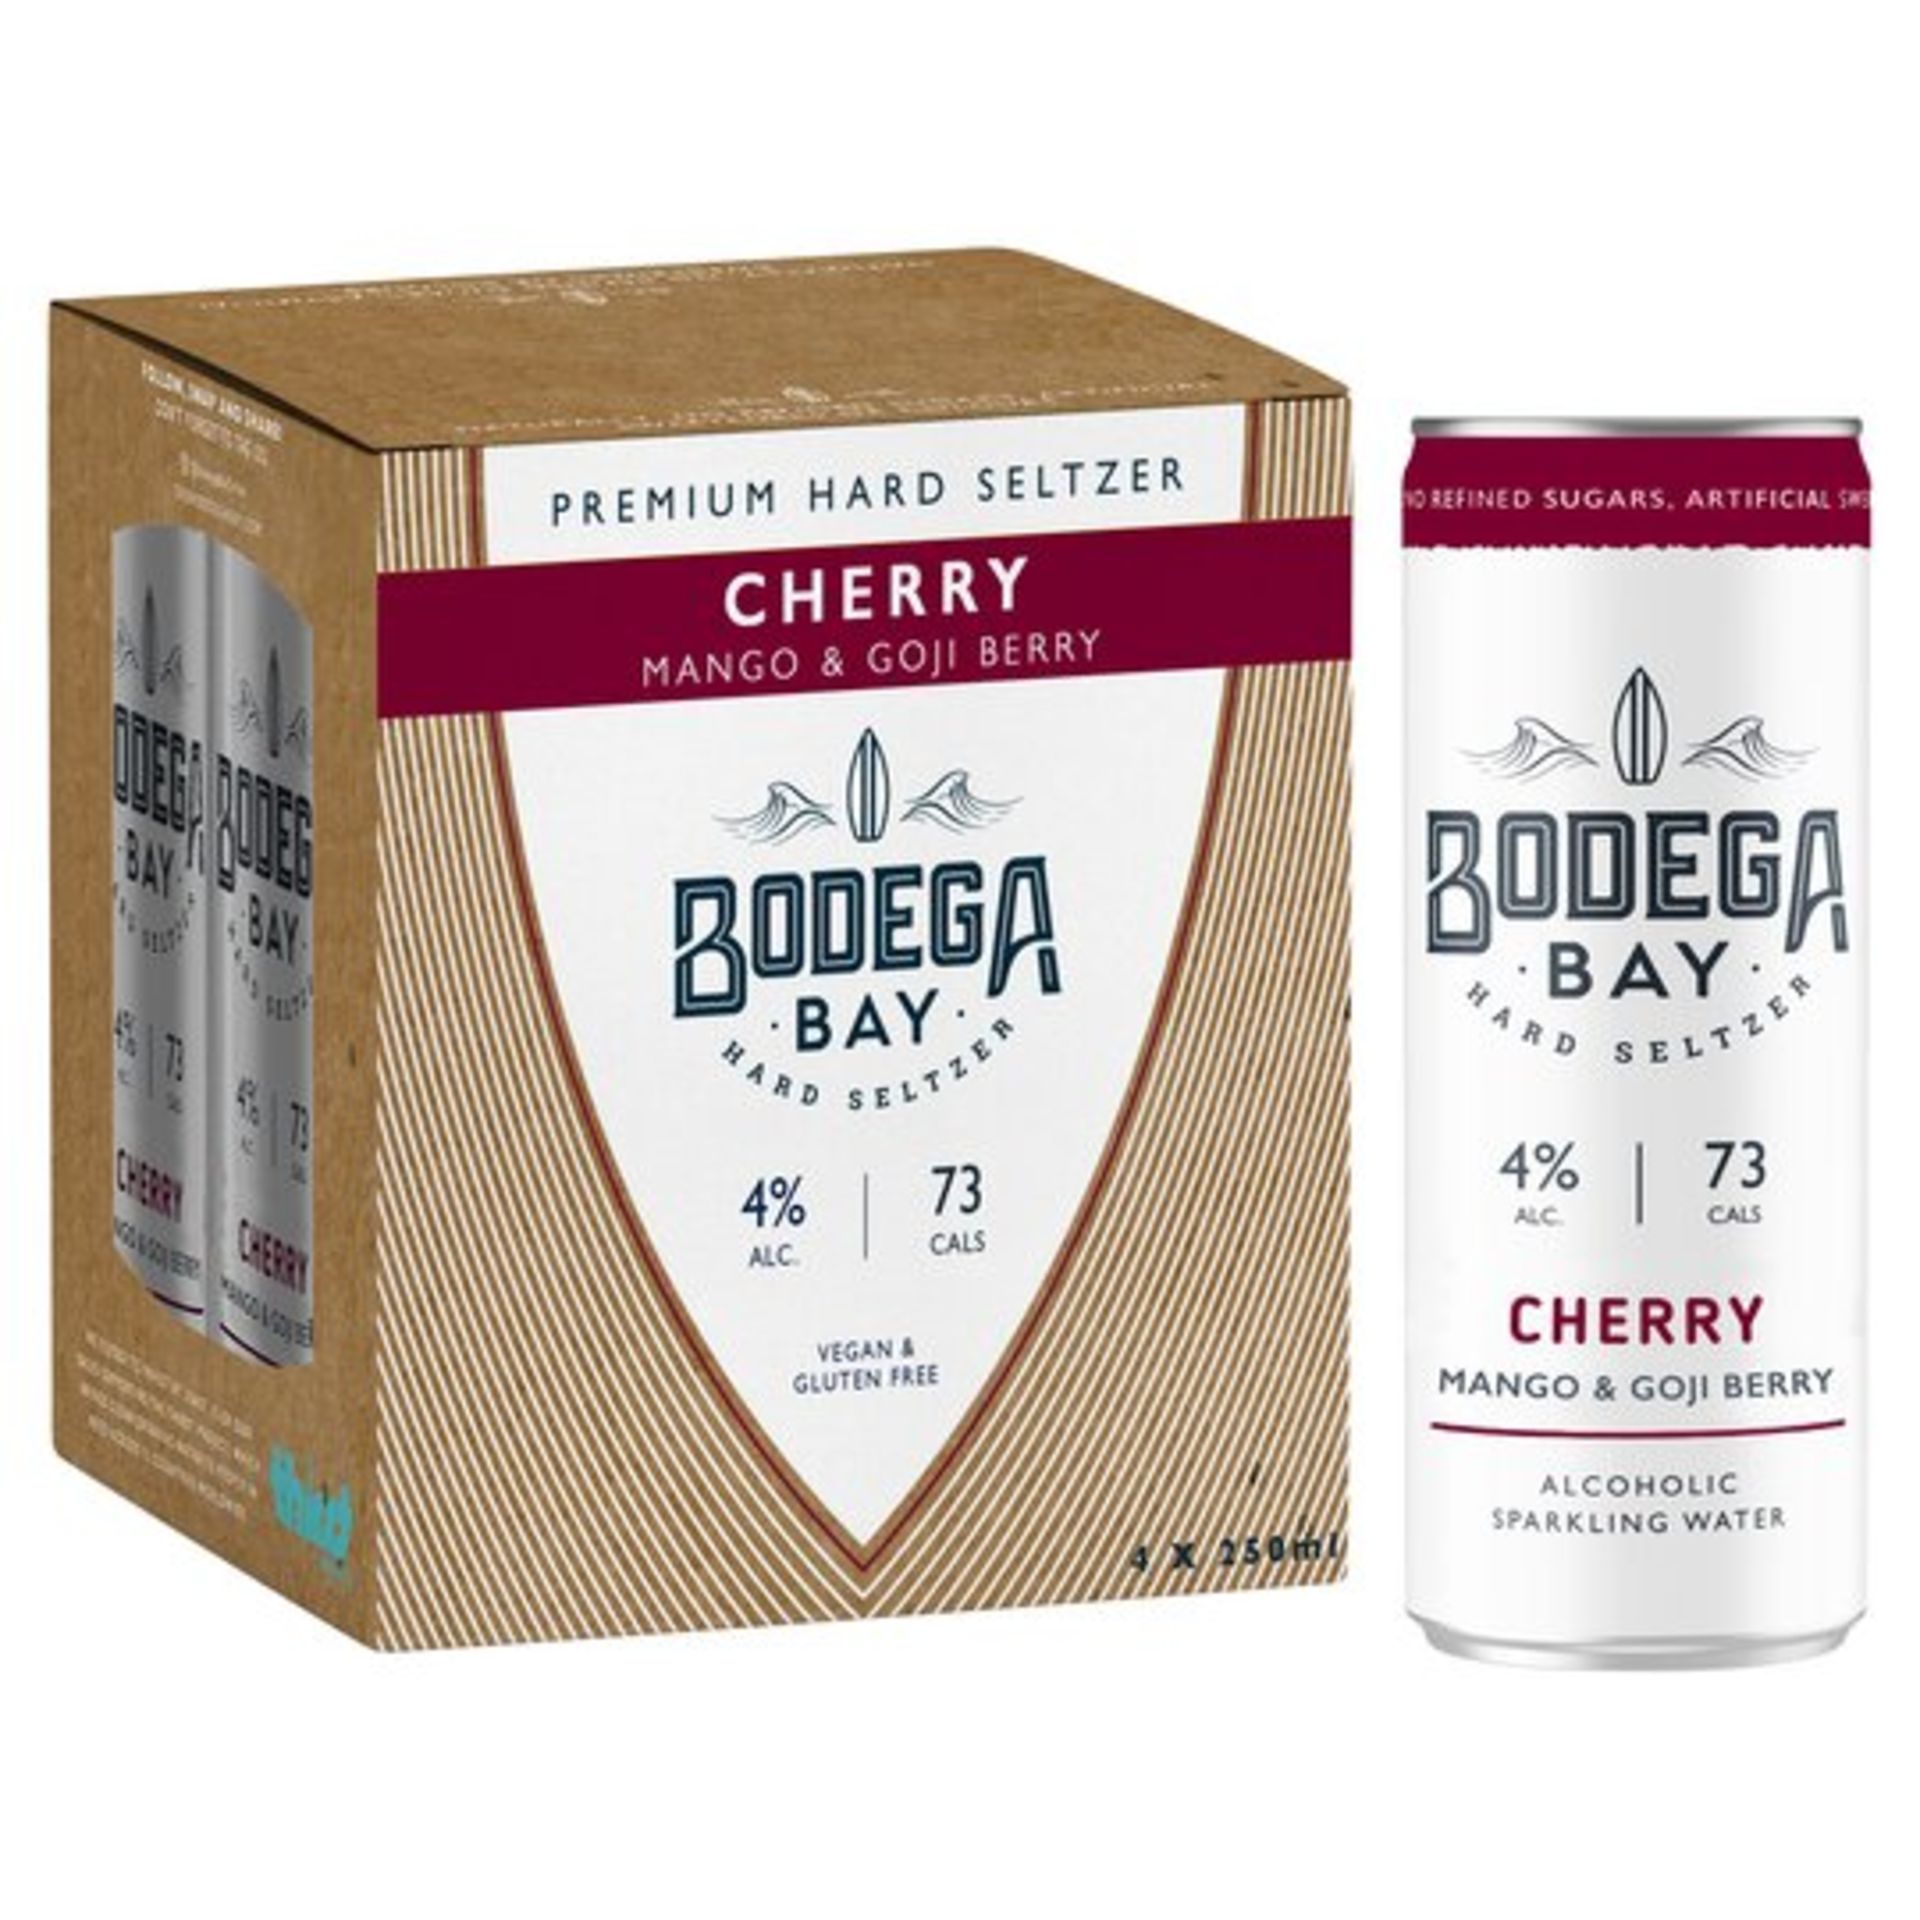 24 x Bodega Bay Hard Seltzer 250ml Alcoholic Sparkling Water Drinks - Cherry Mango & Goji Berry - 4% - Image 3 of 7